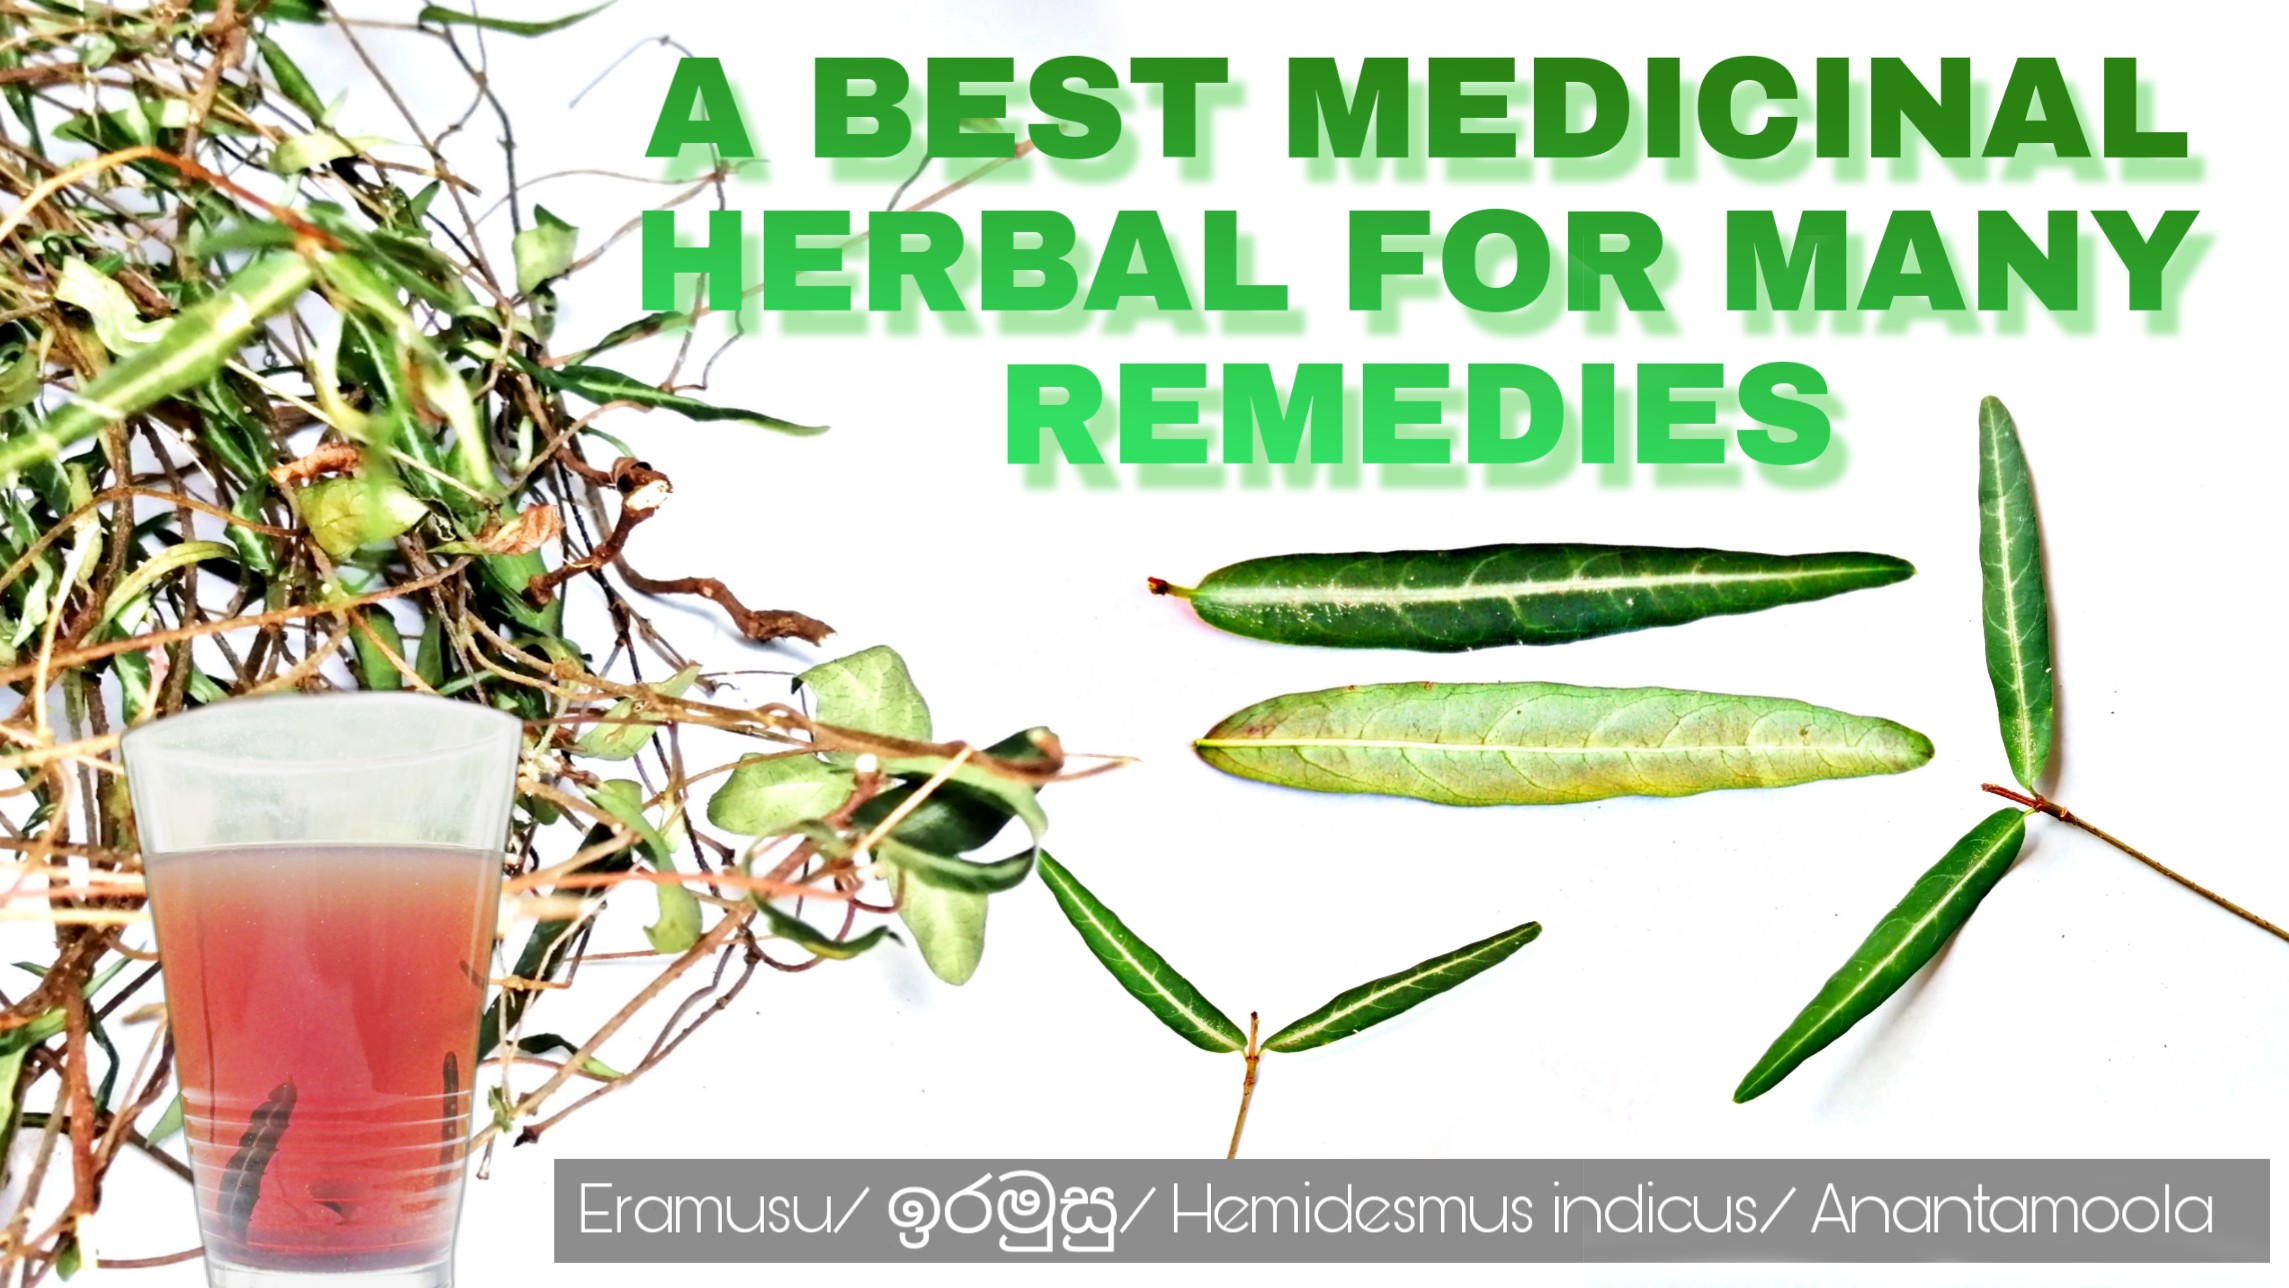 Best Herbal for many remedies – Eramusu-Hemidesmus indicus-Anantamoola